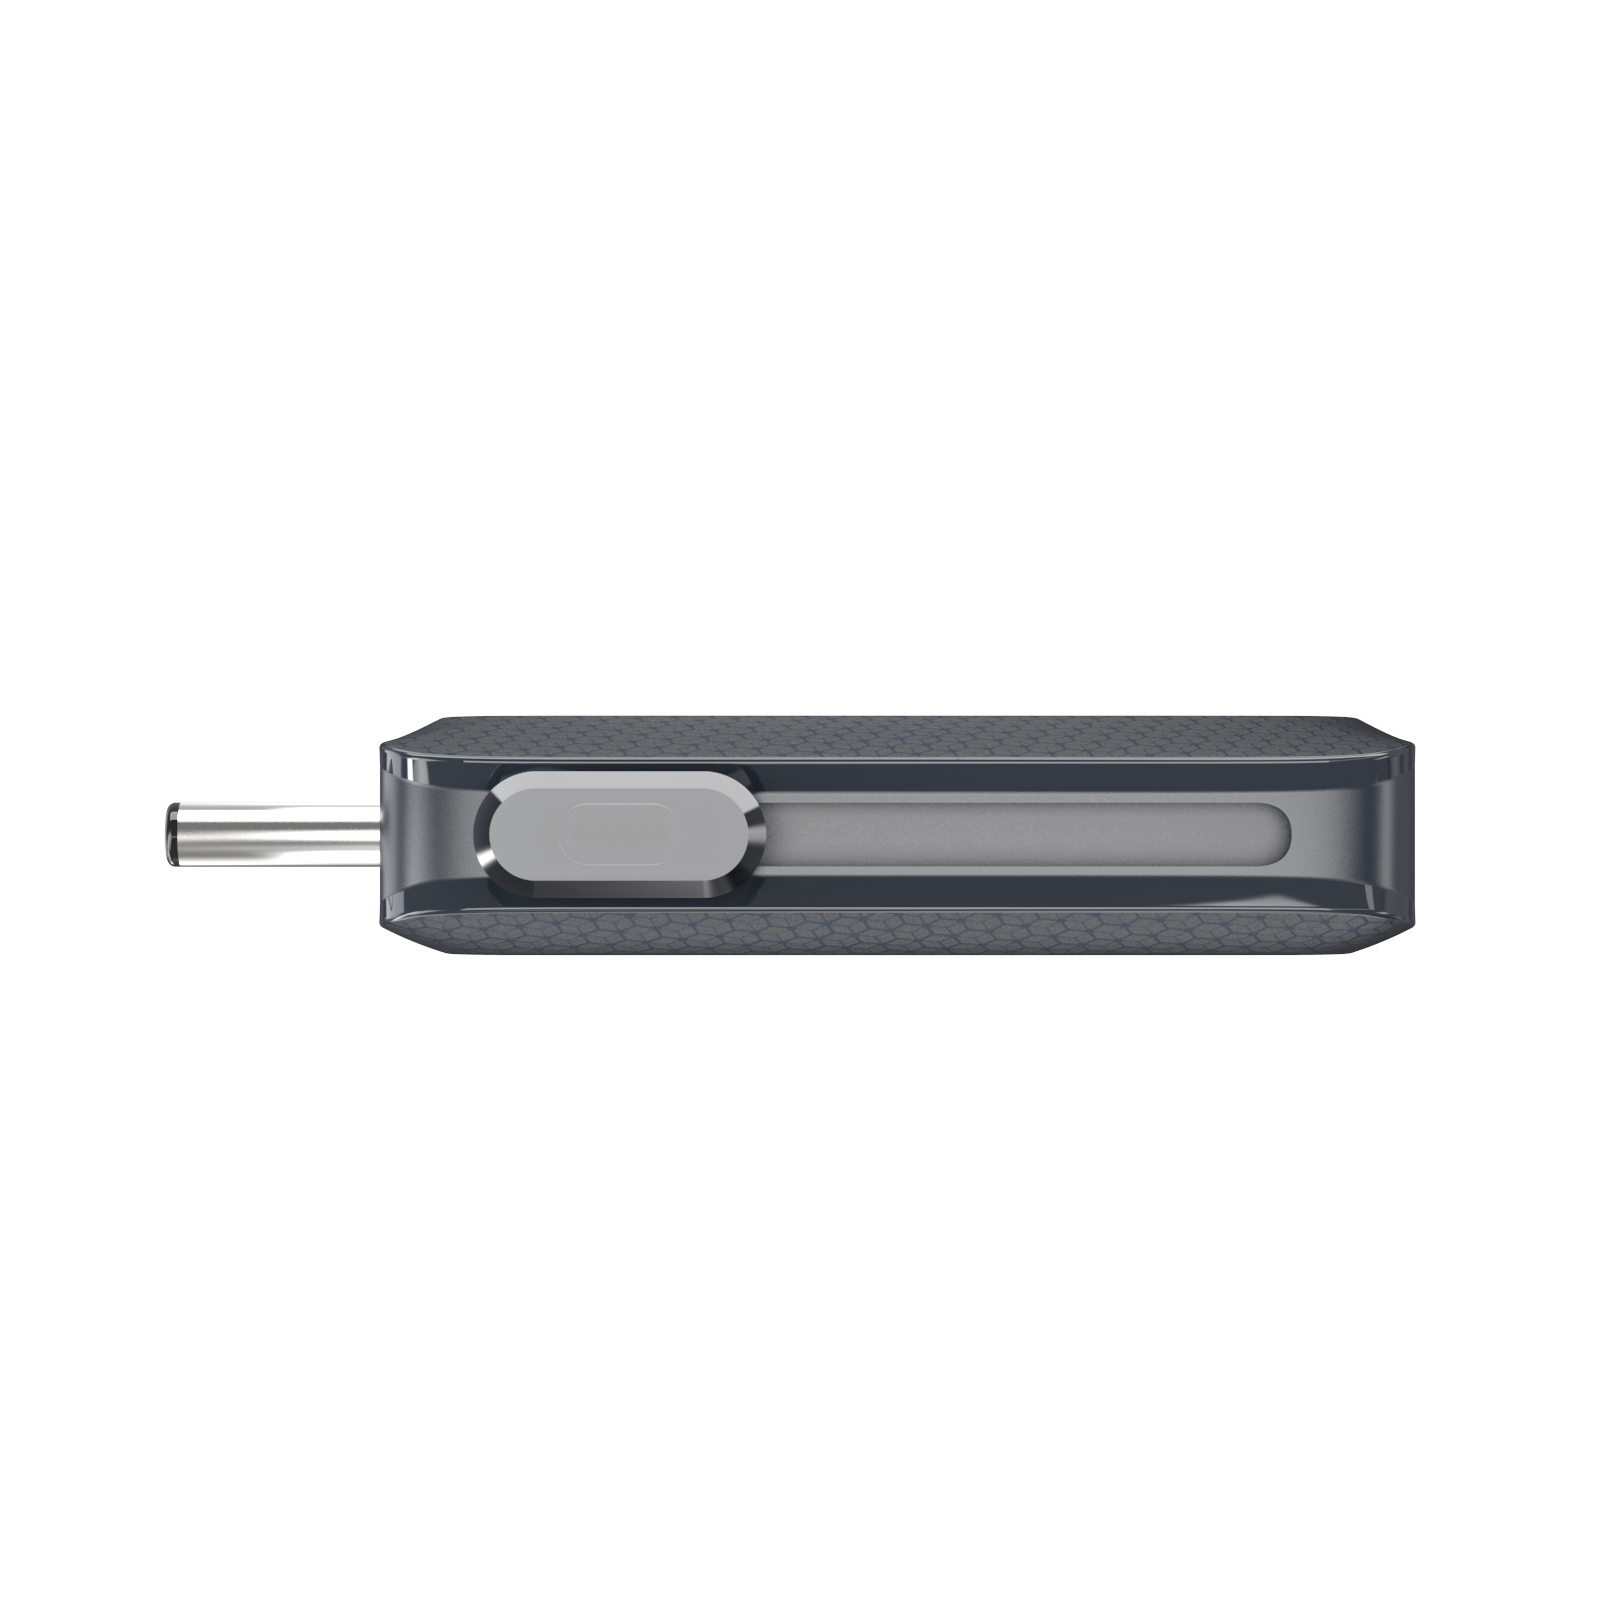 USB флеш накопитель SanDisk 64GB Ultra Dual USB 3.0/Type-C (SDDDC2-064G-G46) изображение 9